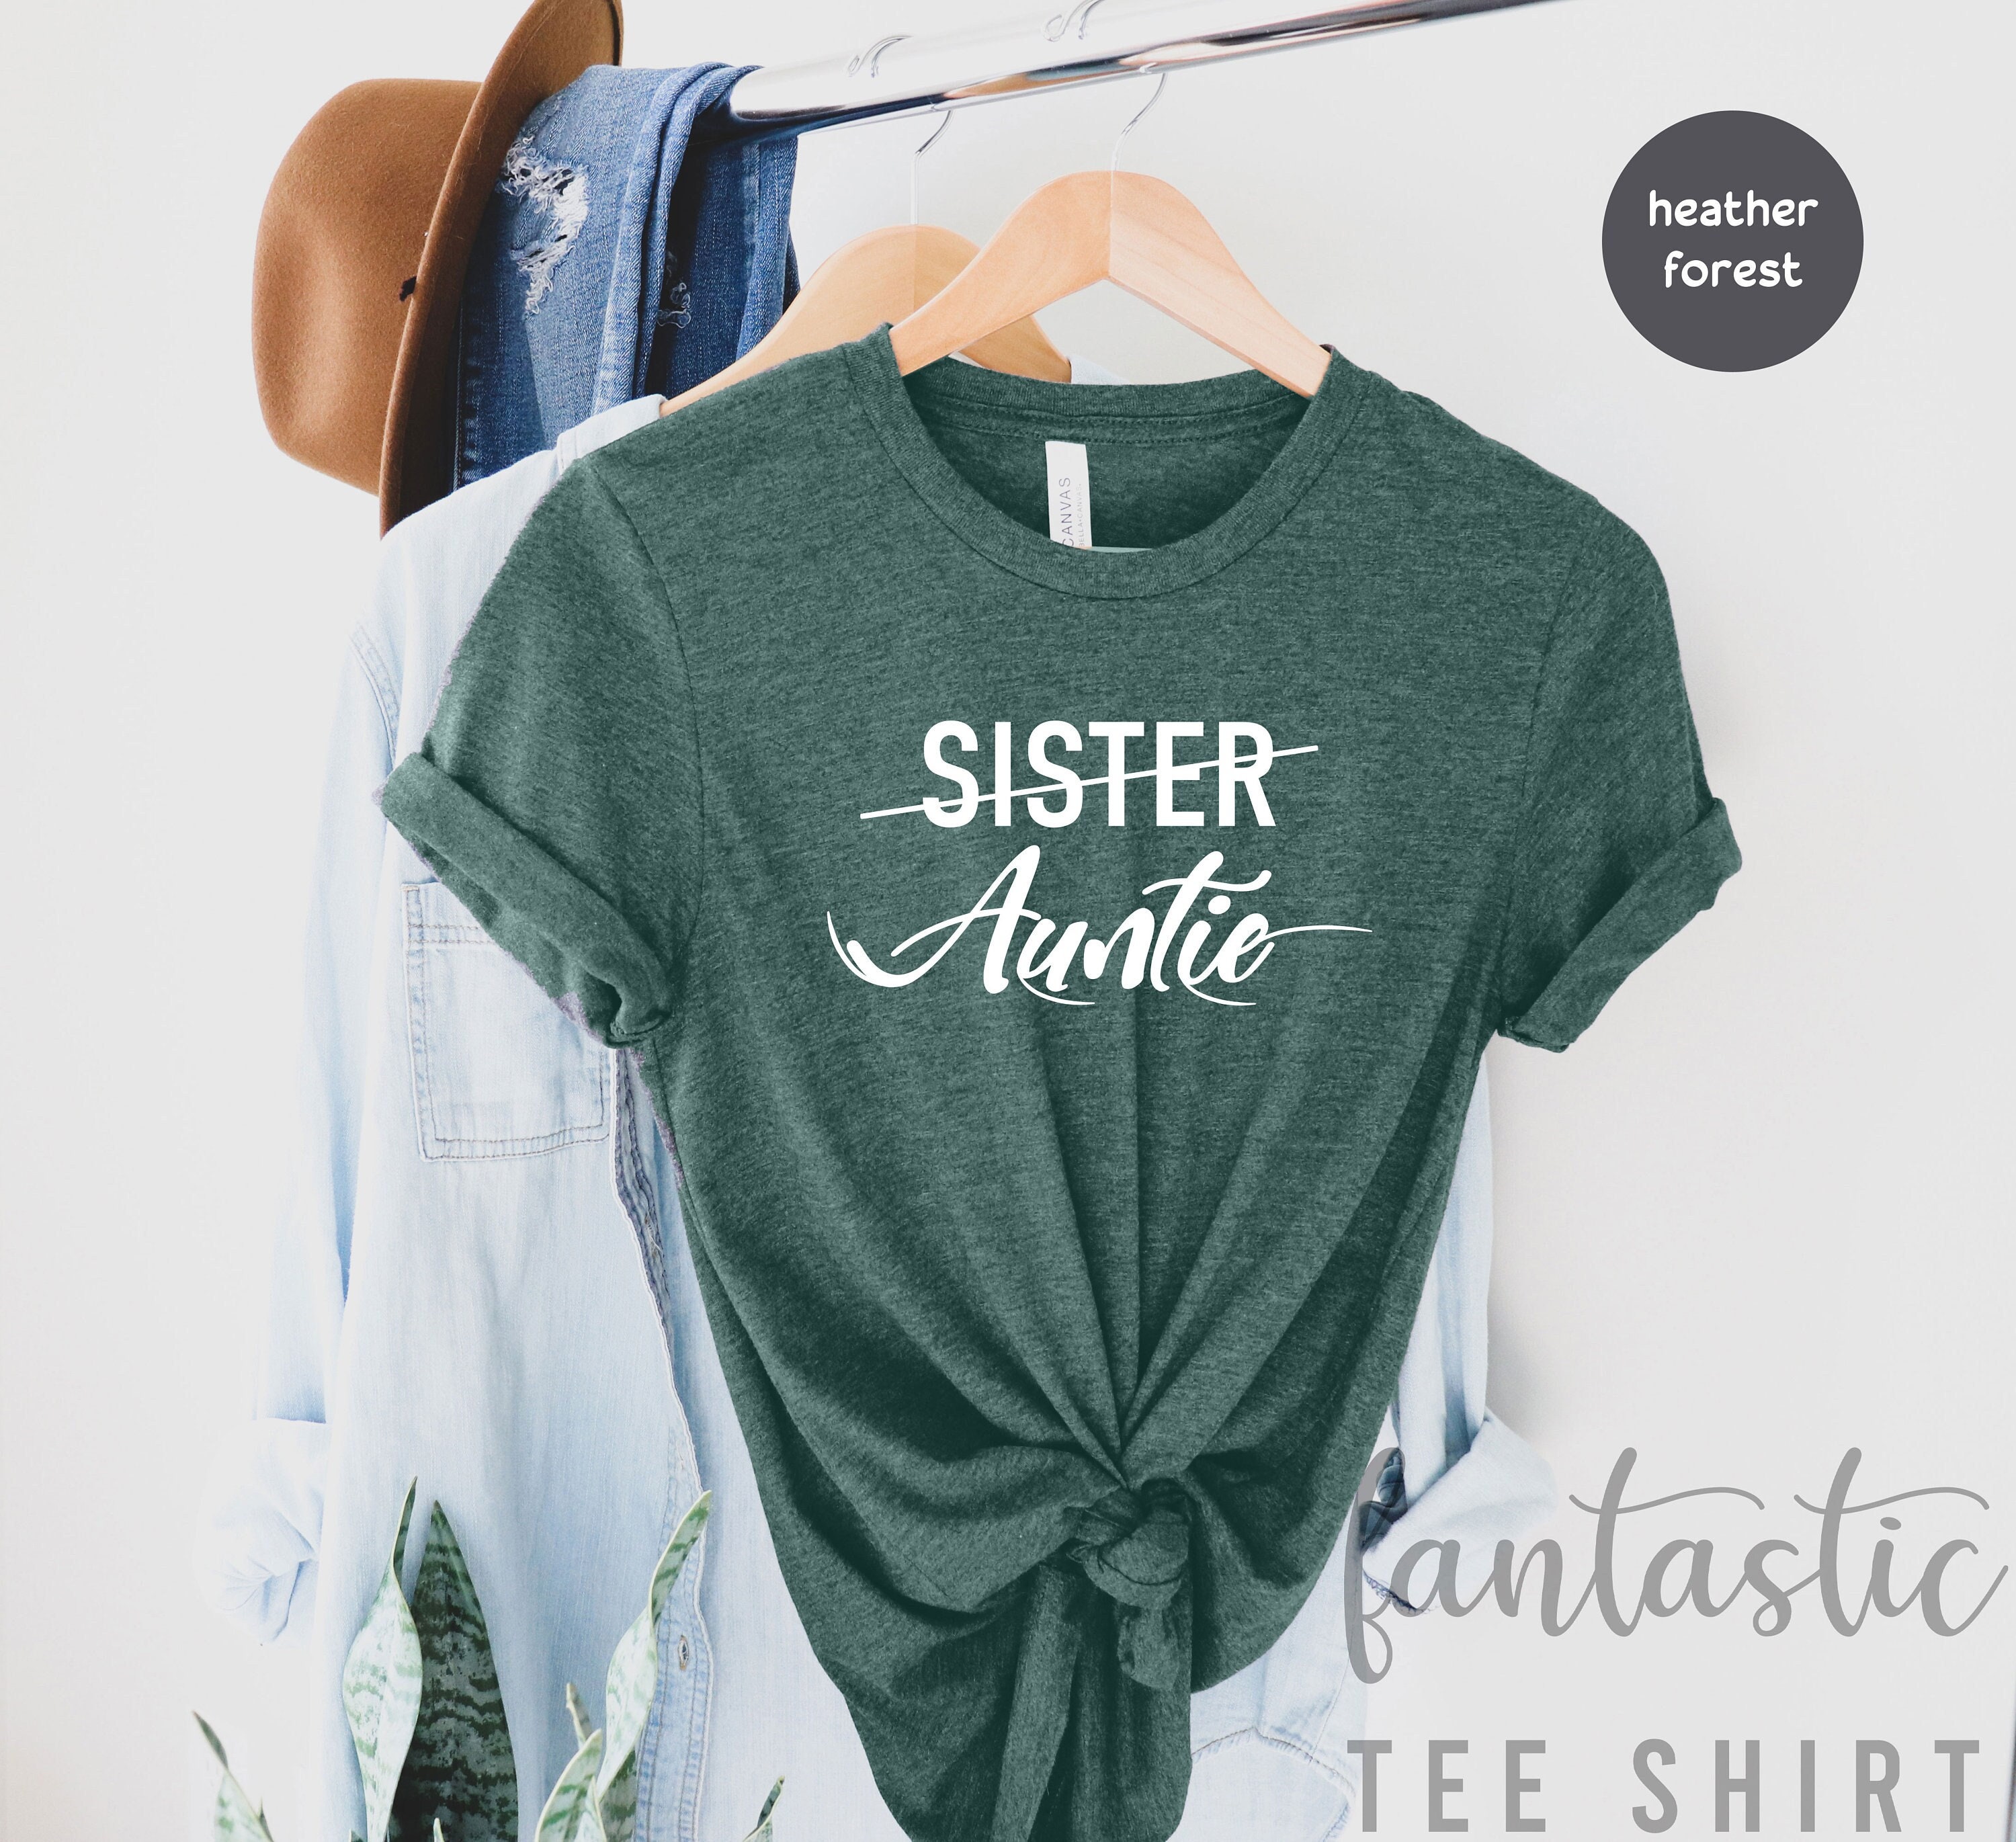 Pregnancy Announcement Shirt Auntie Established Shirt Aunt Gift Auntie Shirt Aunt Shirt Gift for Sister